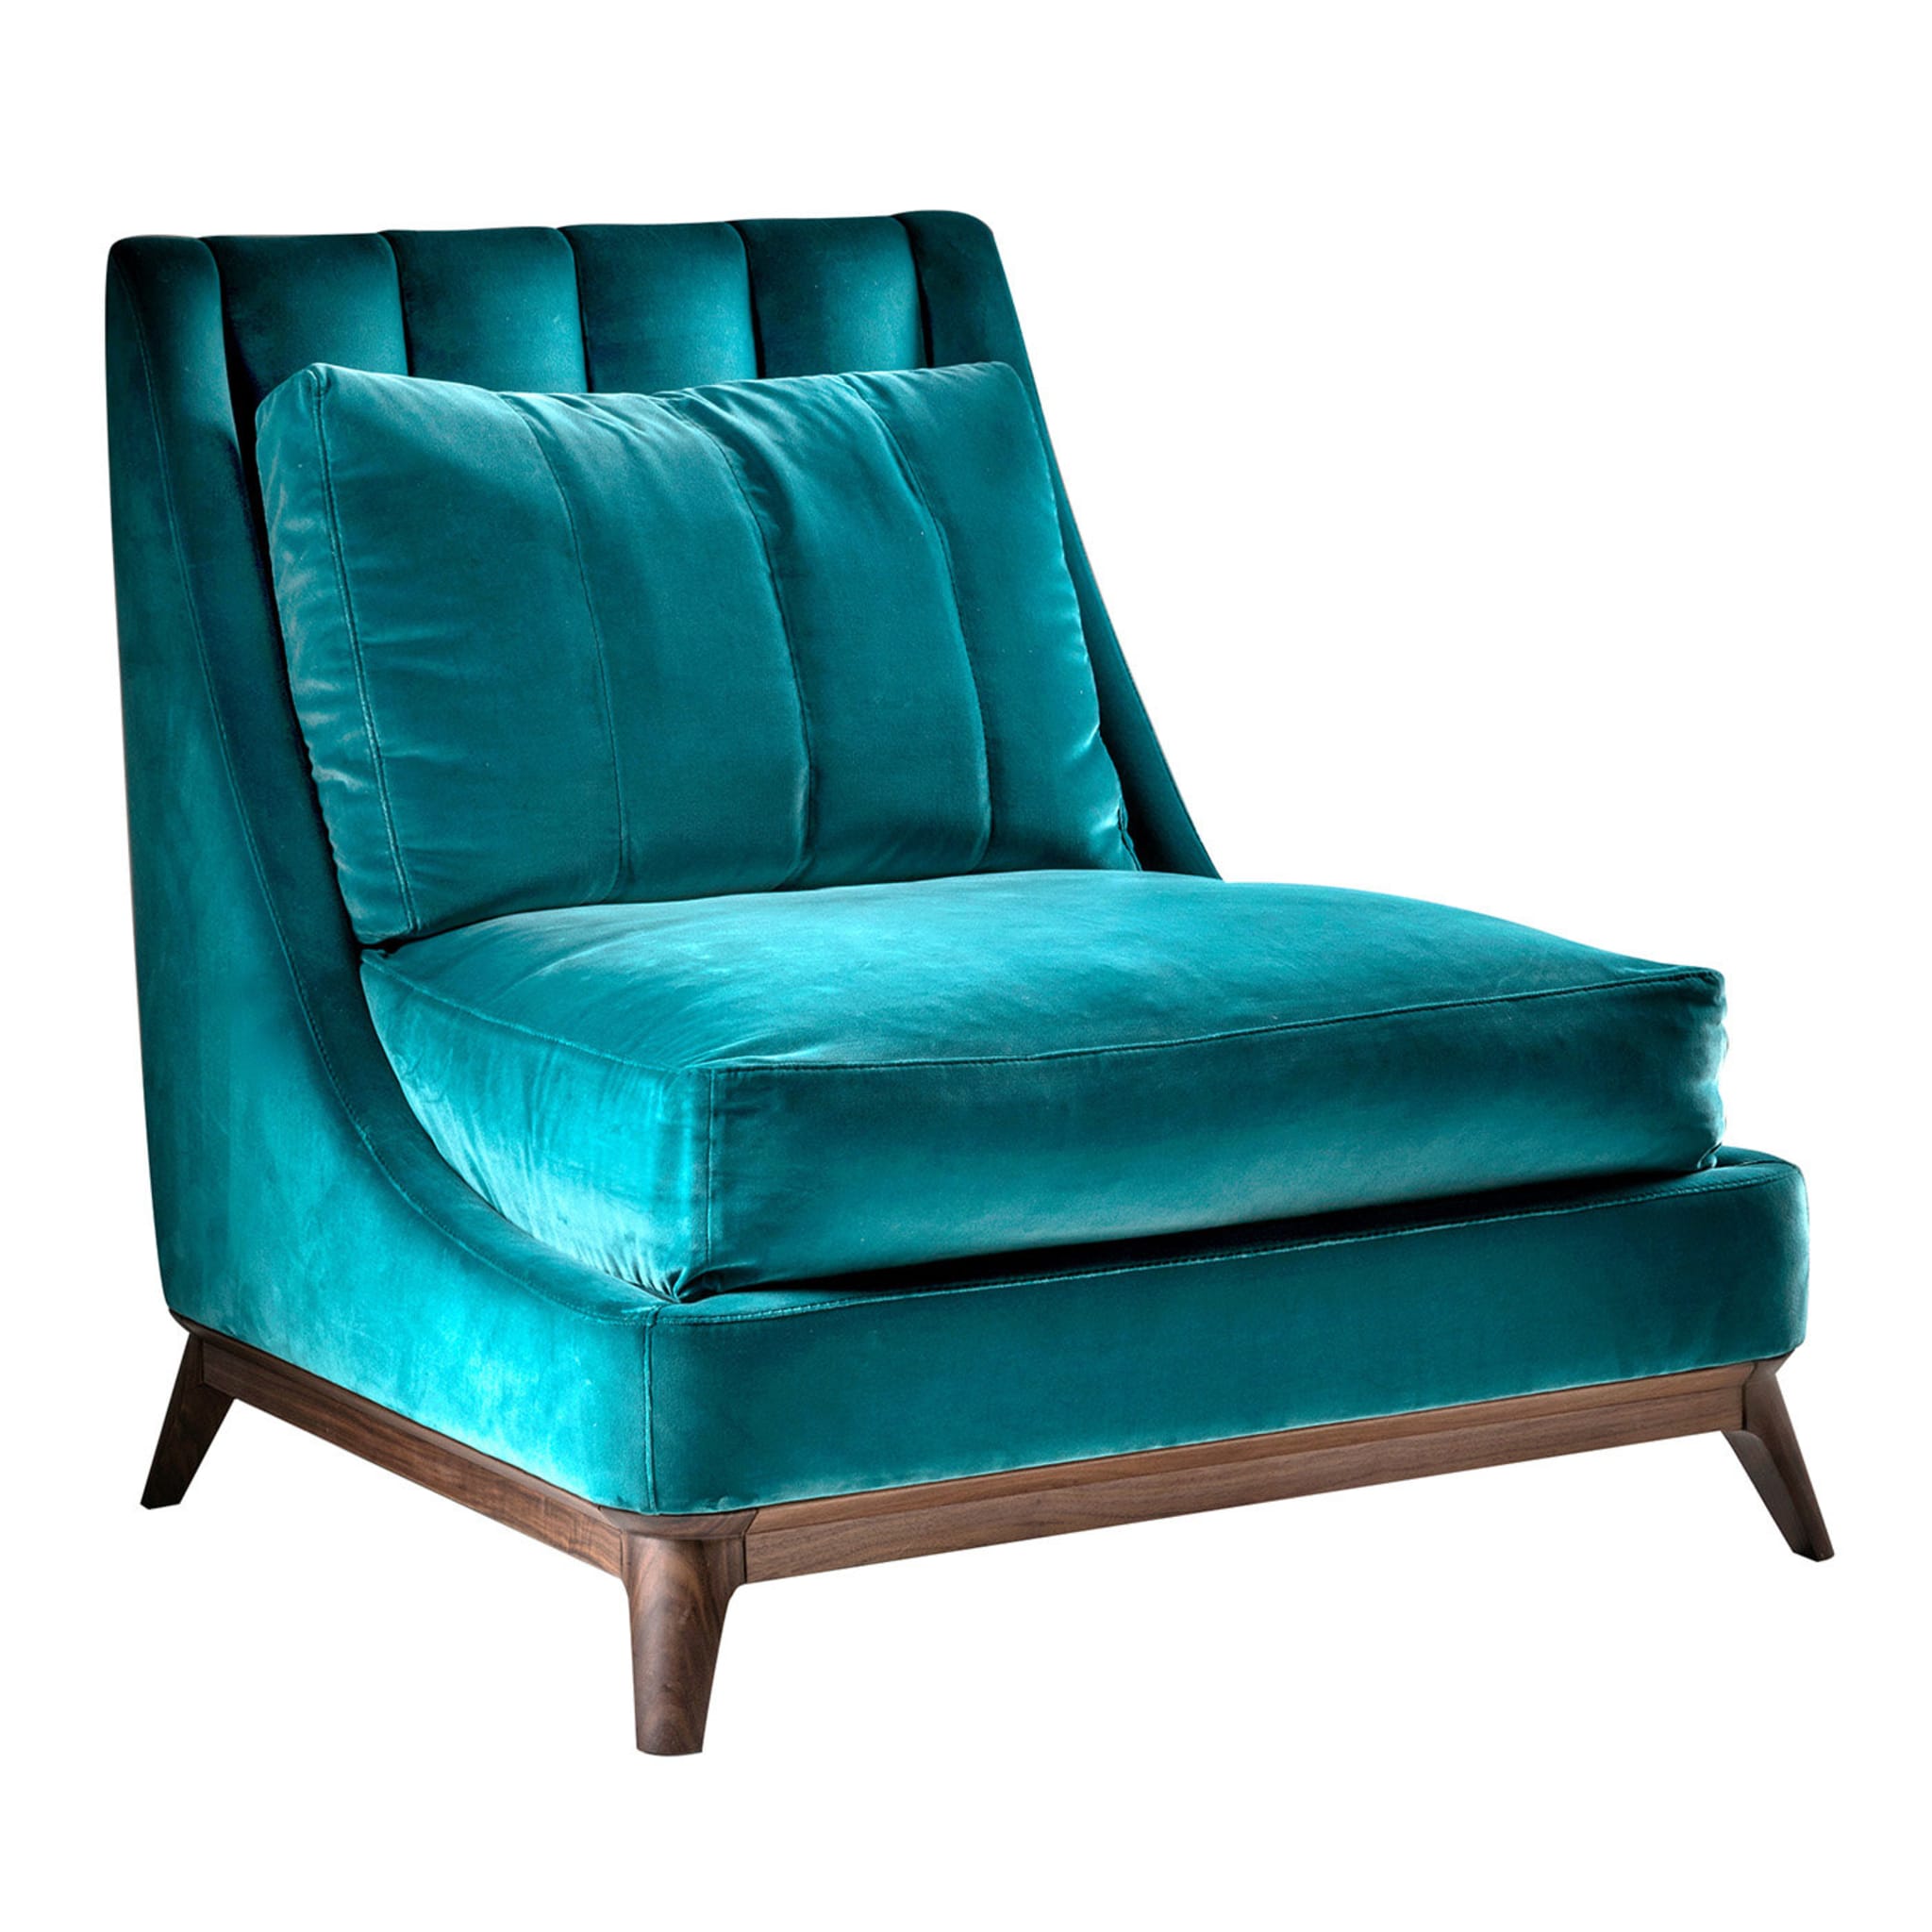 Galatea Lounge Chair by Giovanna Azzarello - Main view